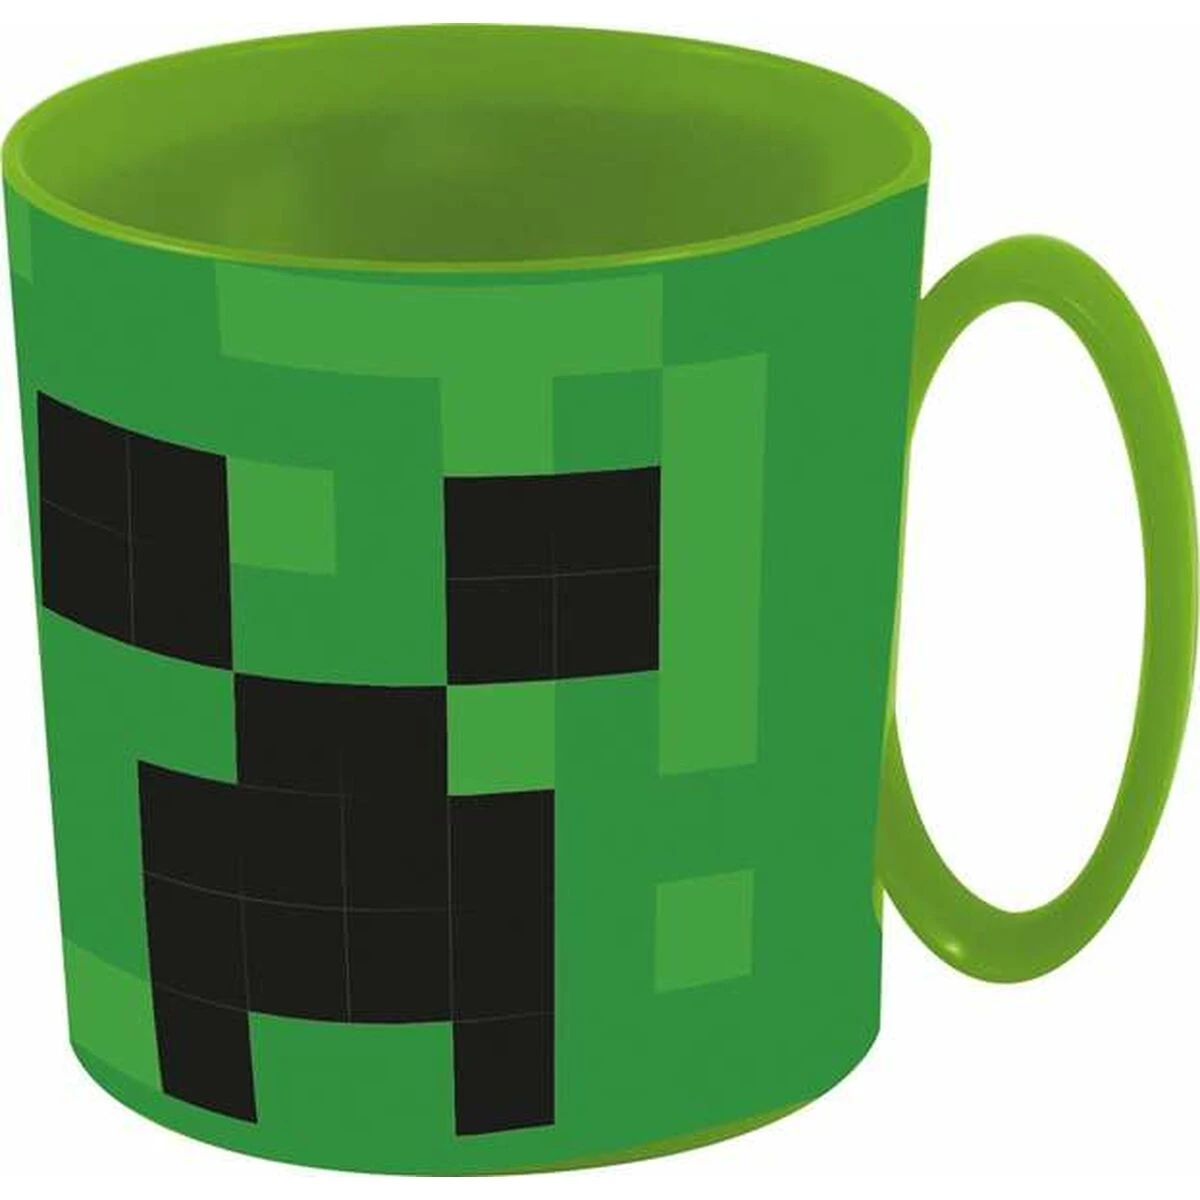 Green mug with pixel face